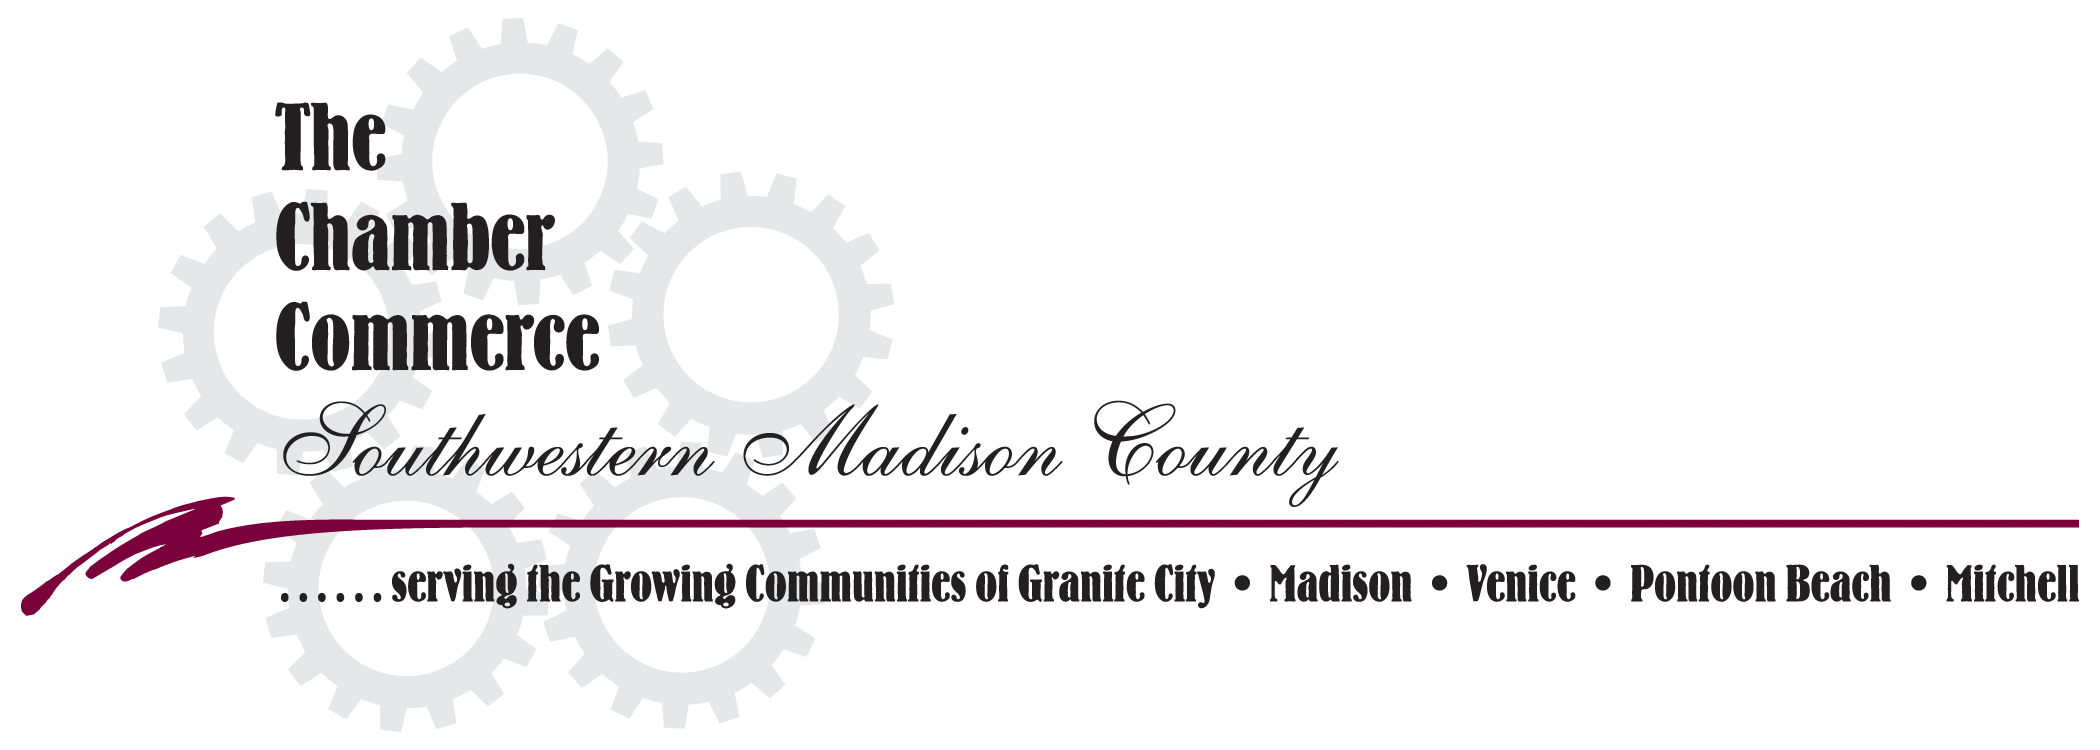 Chamber of Commerce Southwestern Madison County